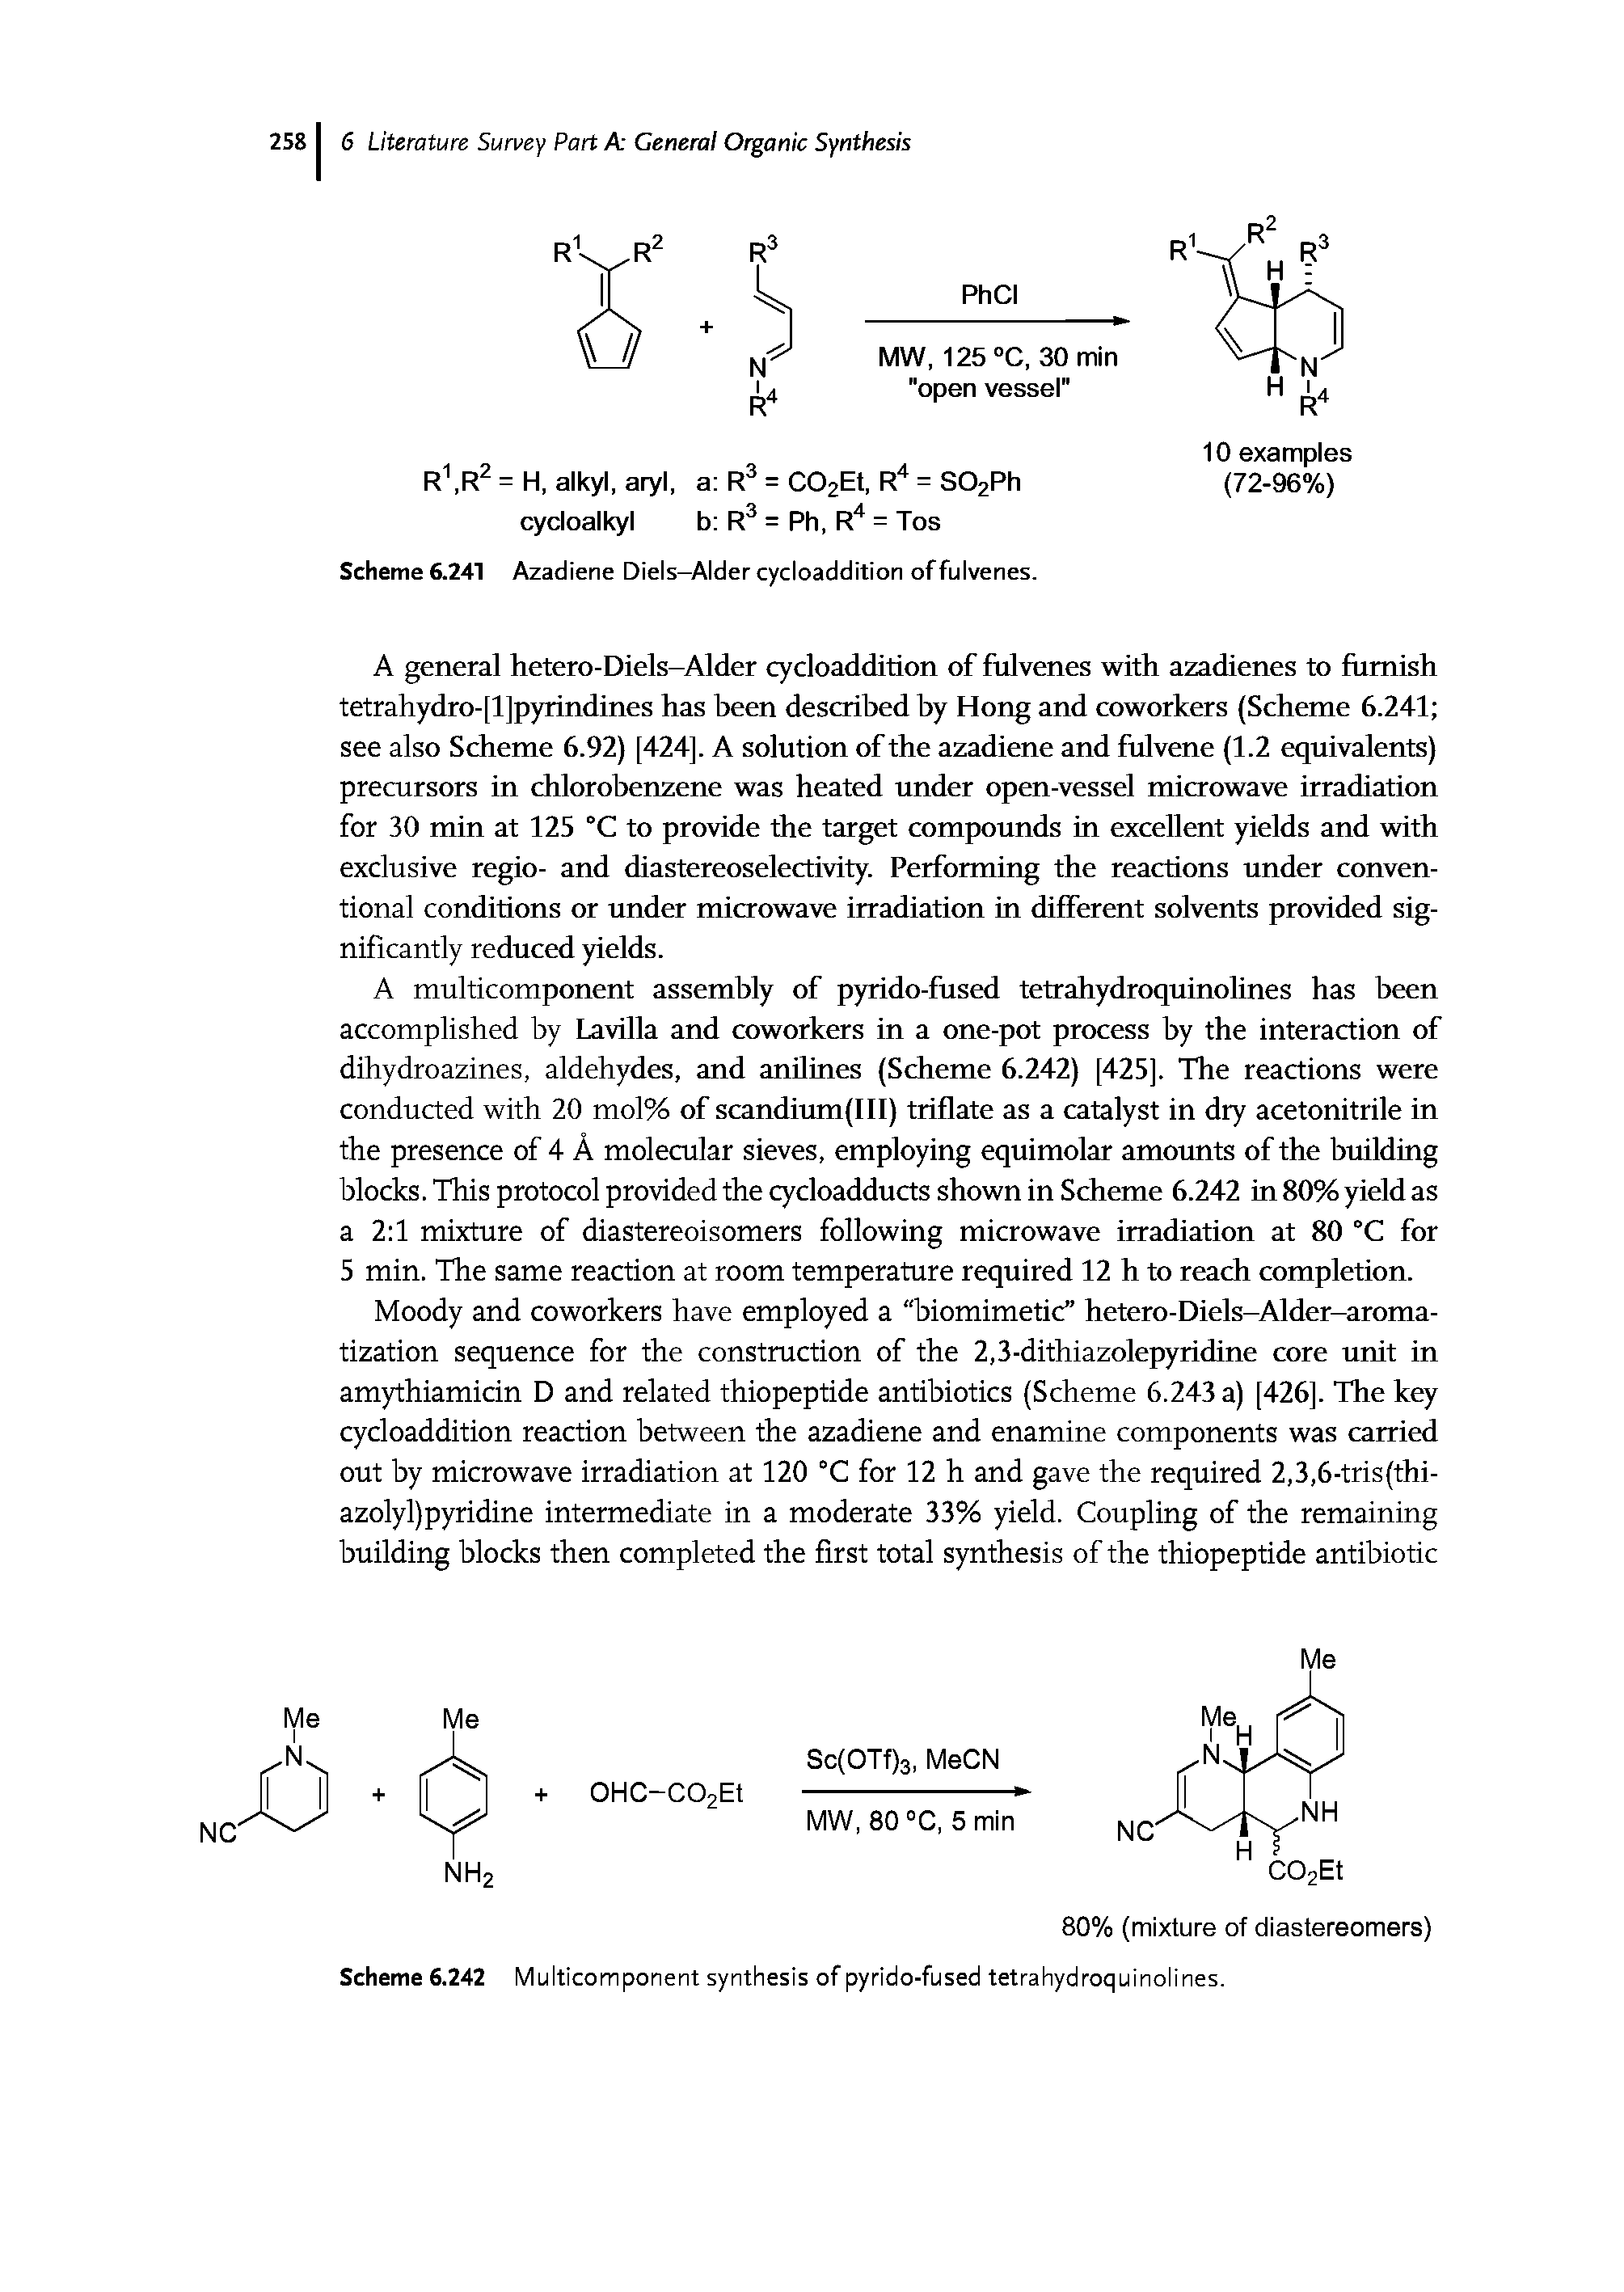 Scheme 6.242 Multicomponent synthesis of pyrido-fused tetrahydroquinolines.